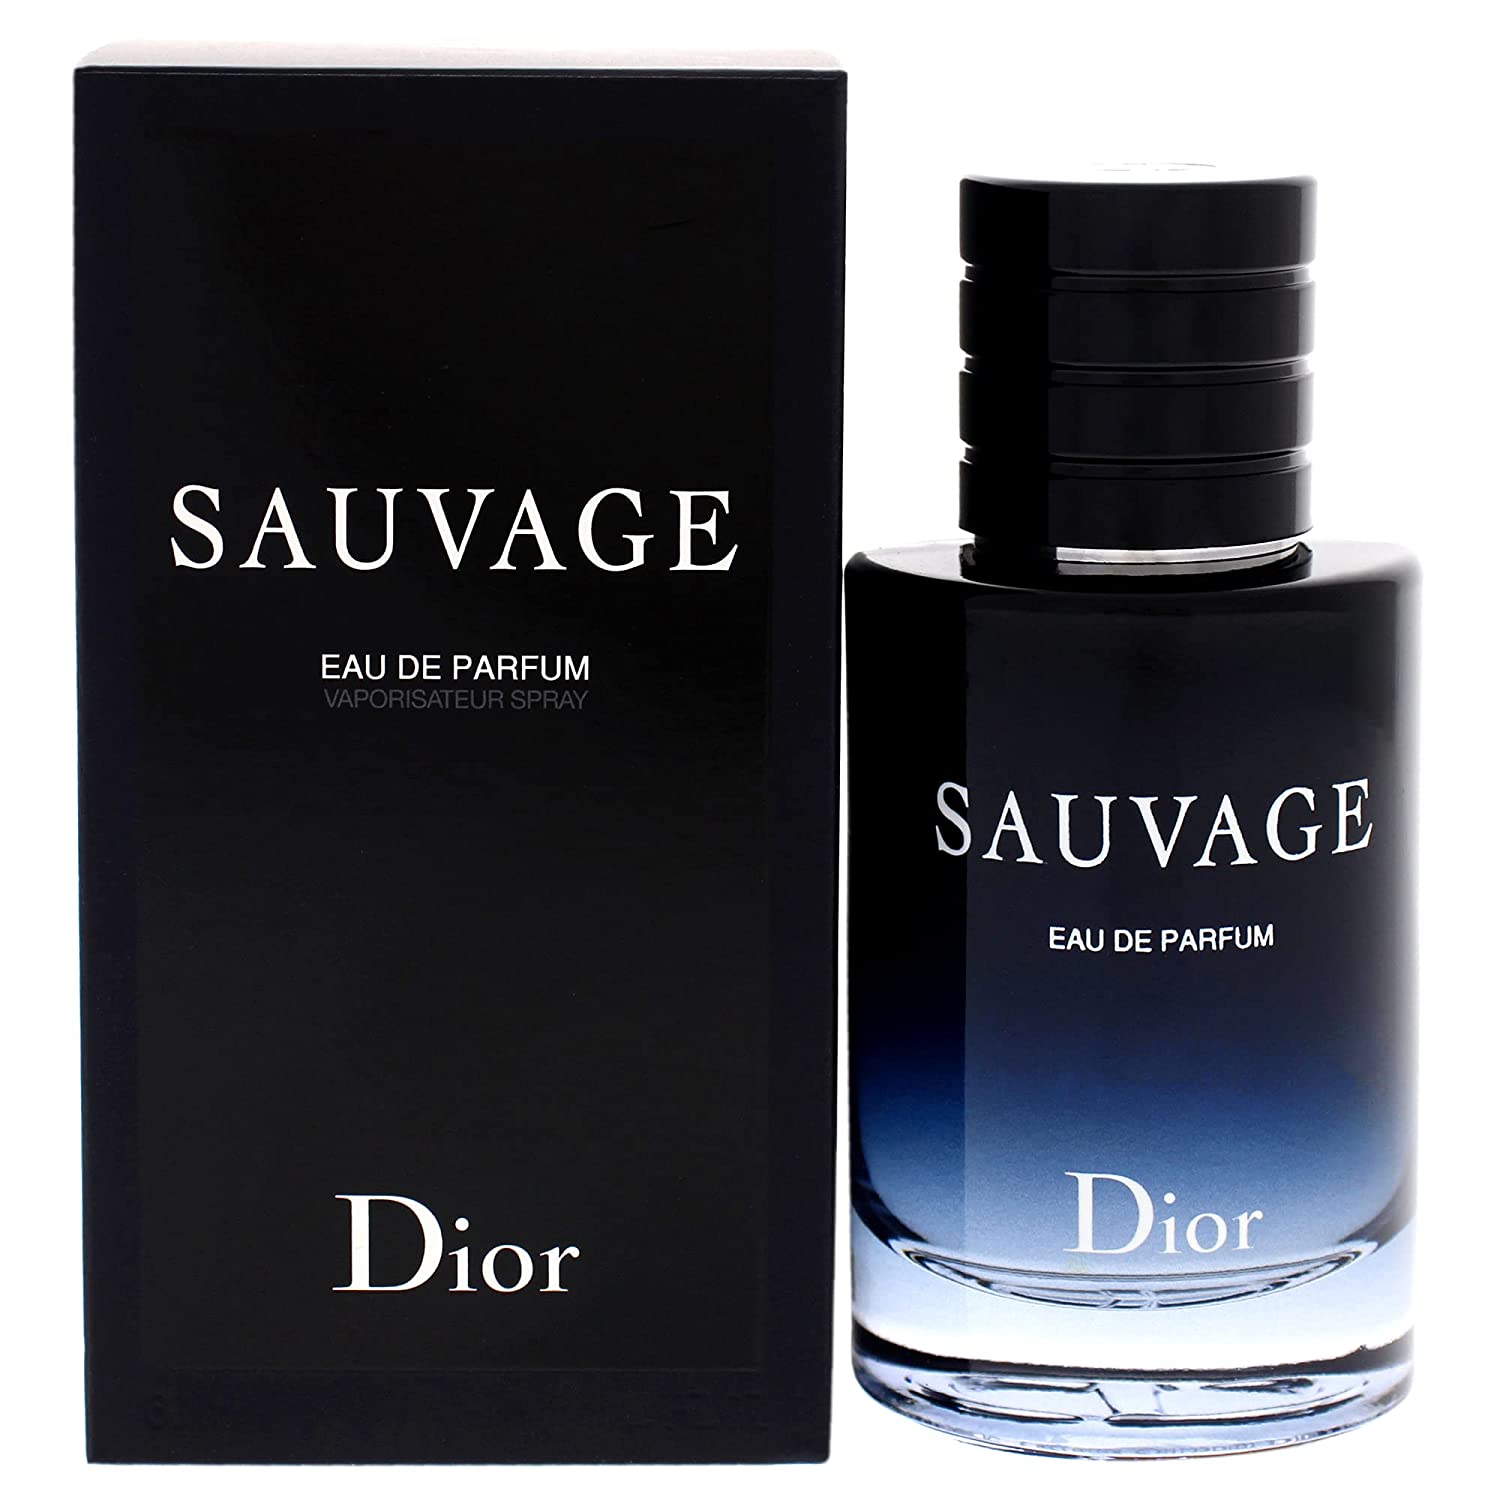 Dior Sauvage  EDT or EDP Vapo  rfragrance